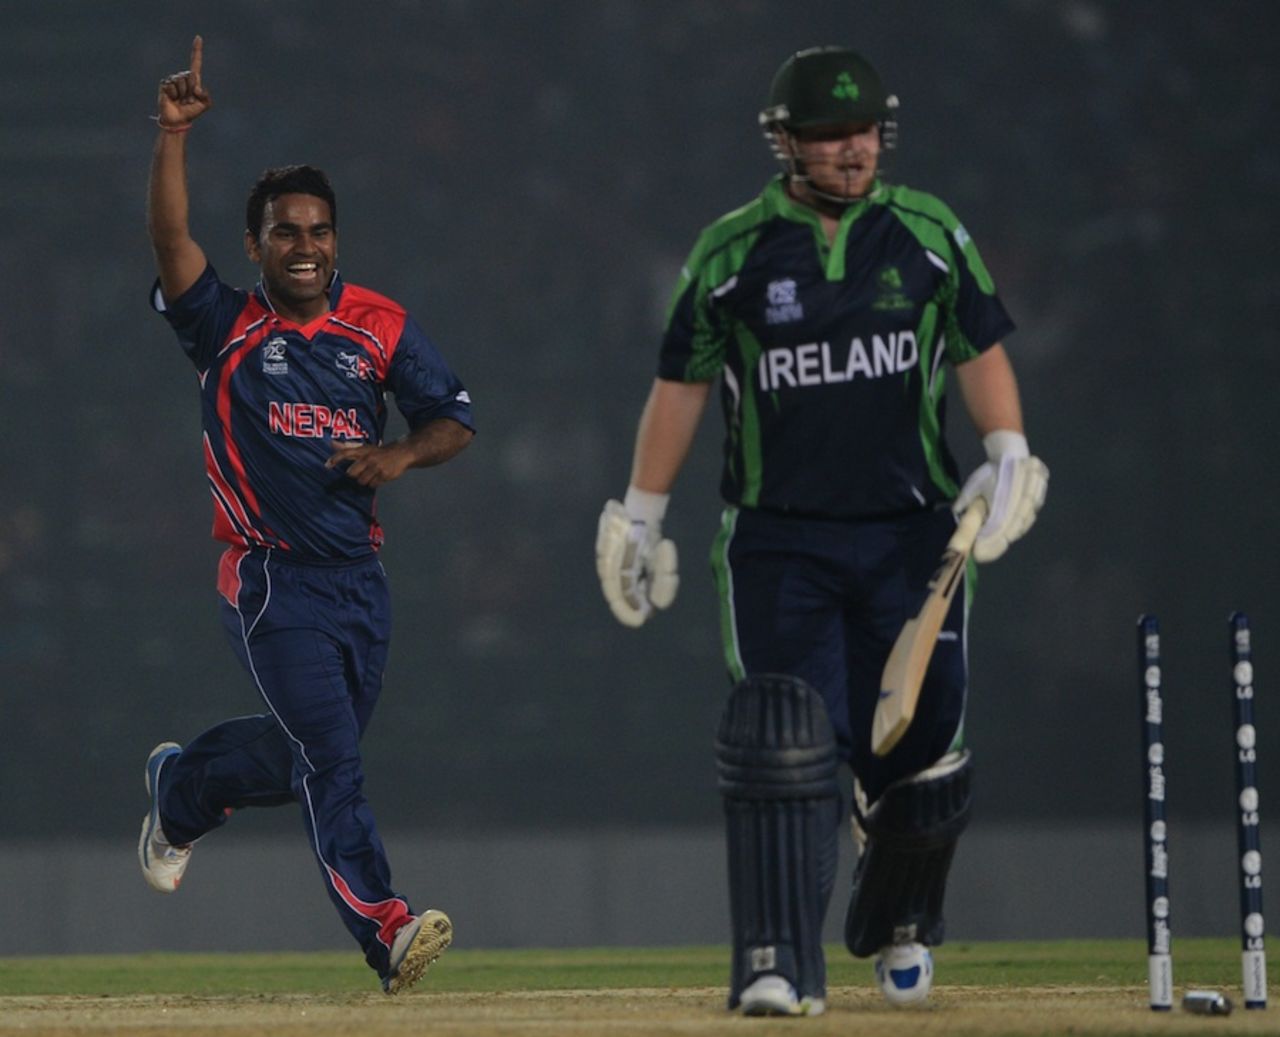 Jitendra Mukhiya took 3 for 24, Ireland v Nepal, World T20 warm-up, Fatullah, March 12, 2014